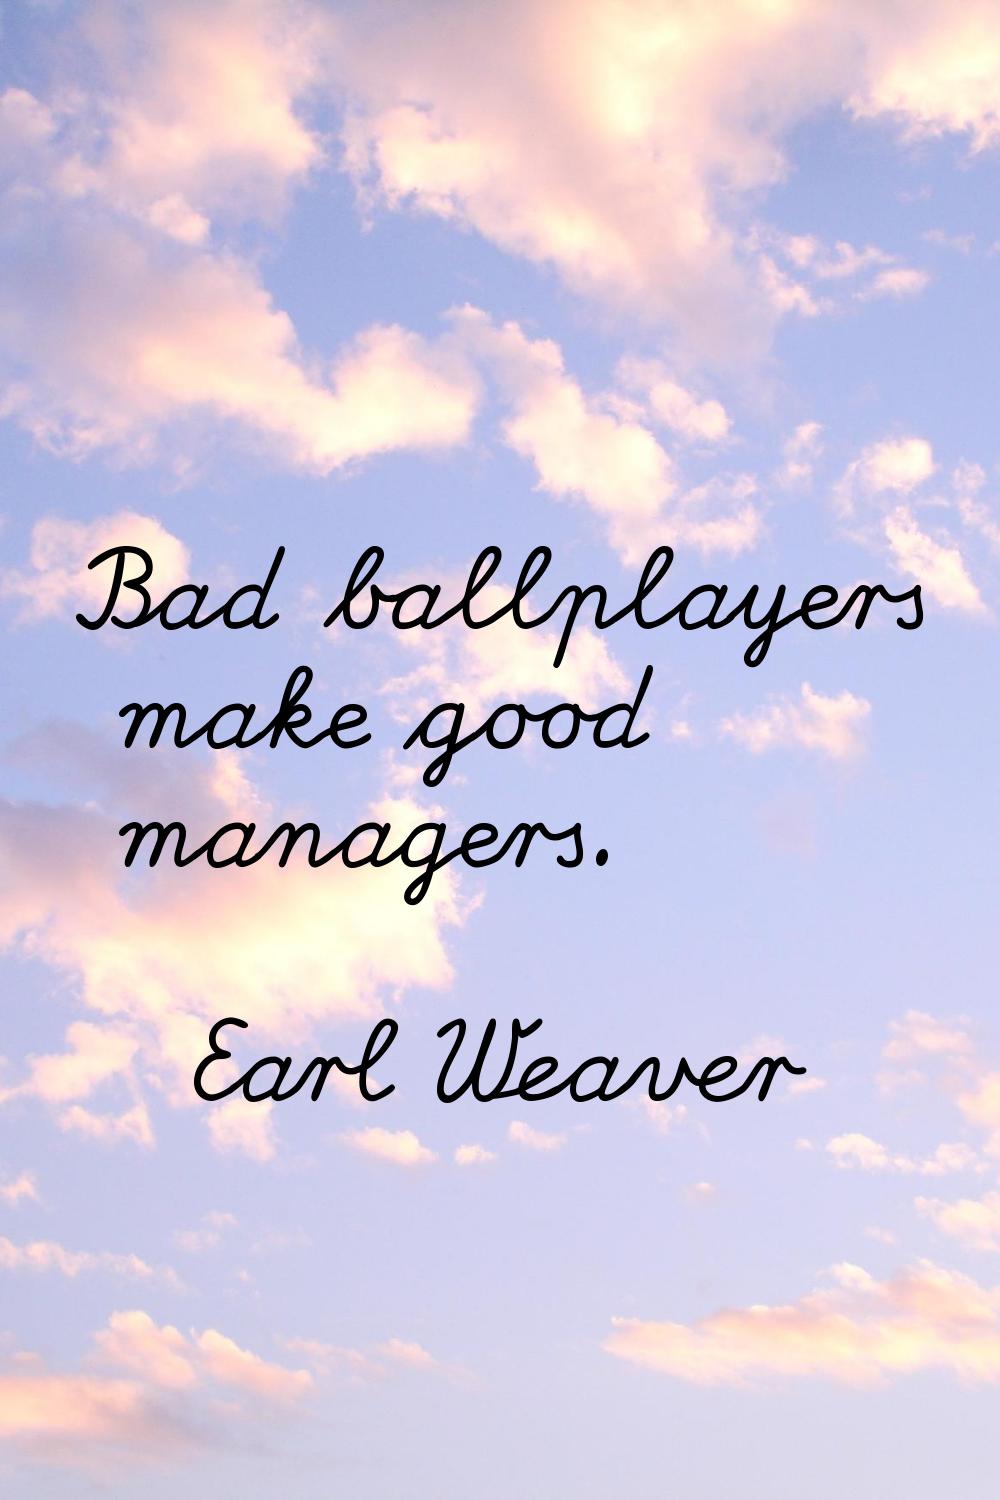 Bad ballplayers make good managers.